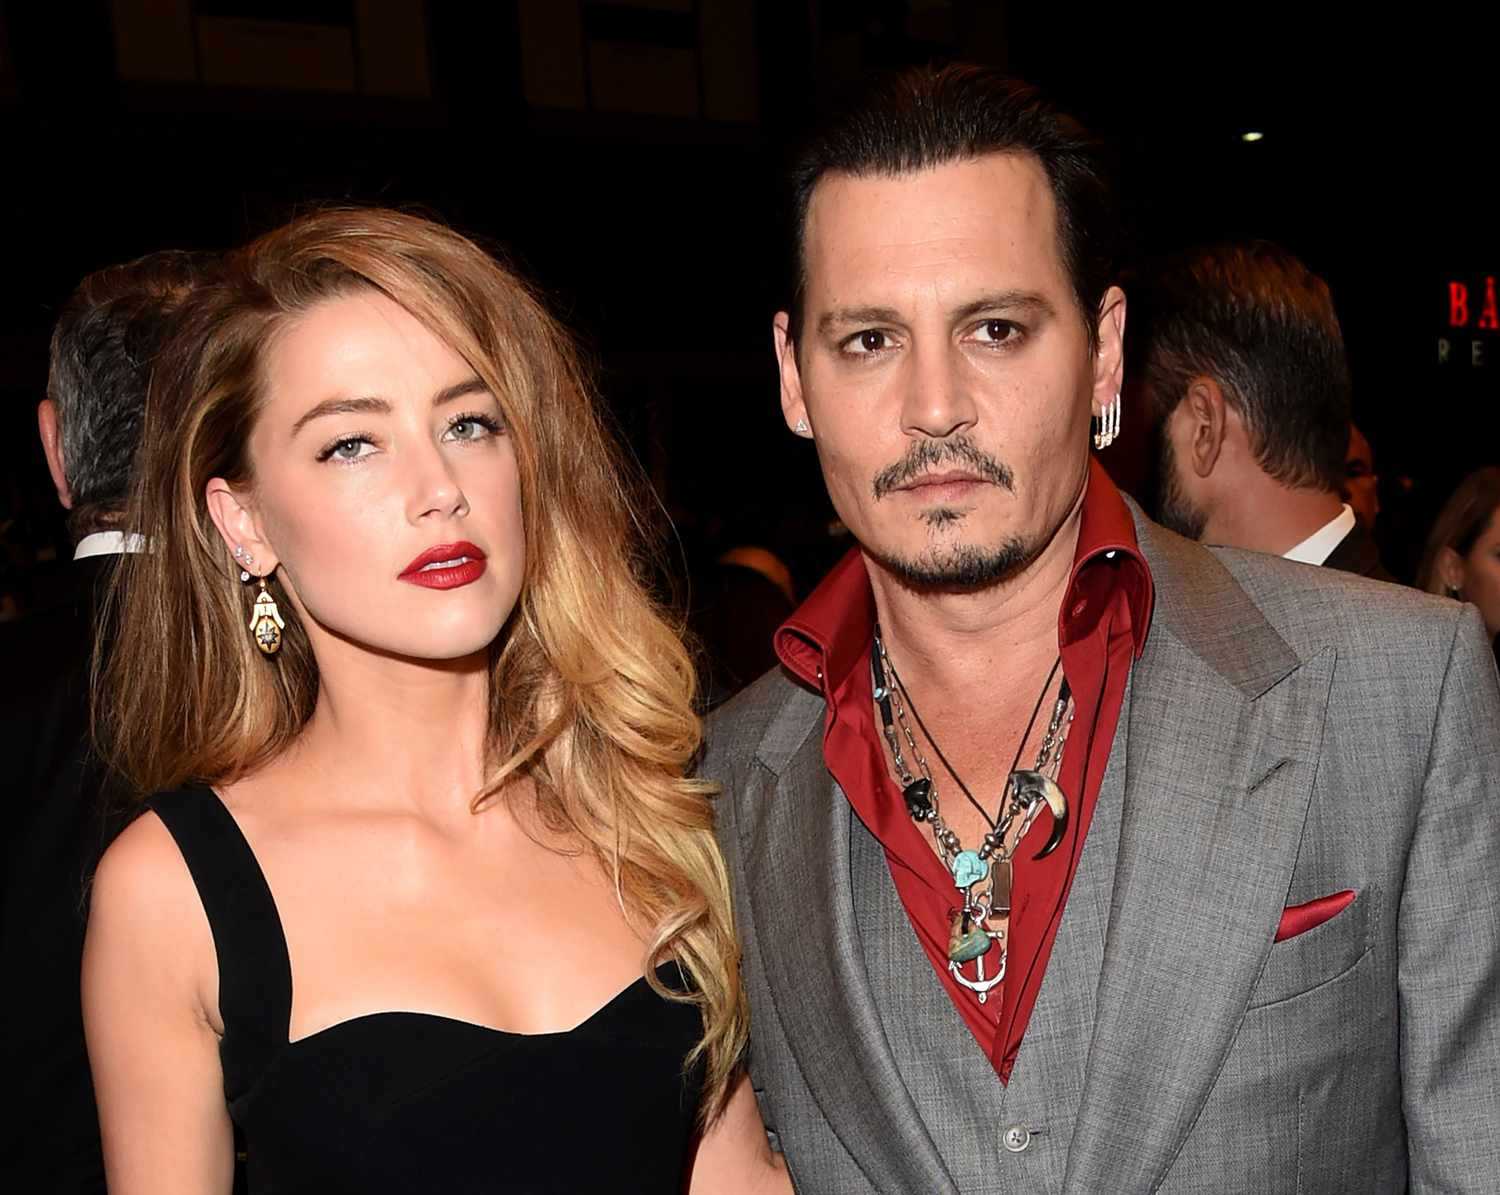 Johnny Depp wins against Amber Heard: A shocking $15M verdict unveiled